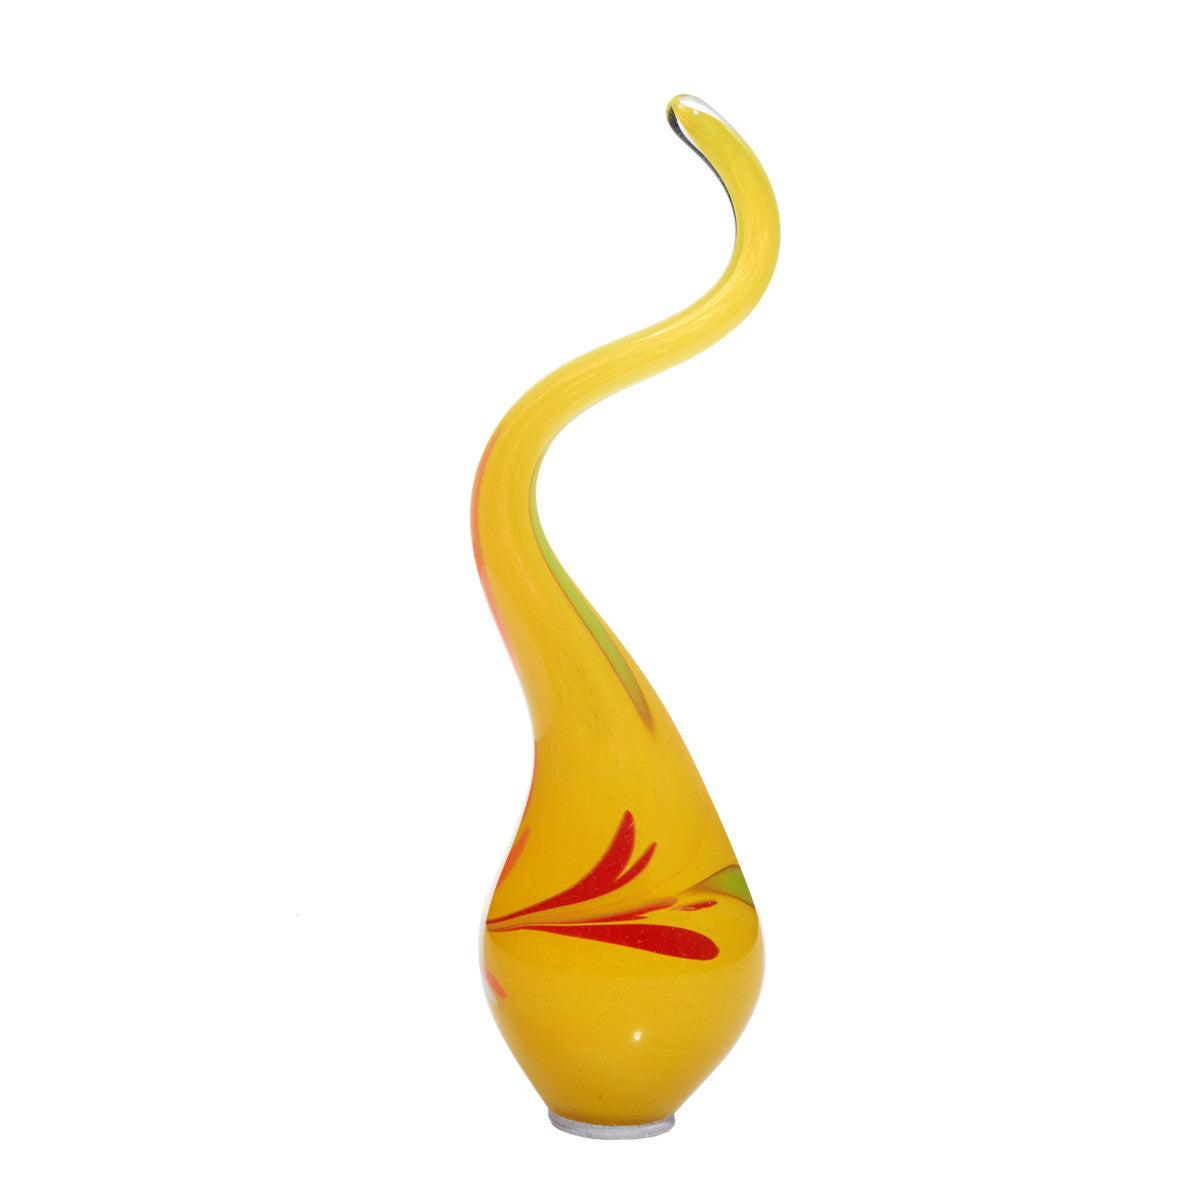 Garten-Miniatur-Flamme Gartenflair mit Stab 26 cm